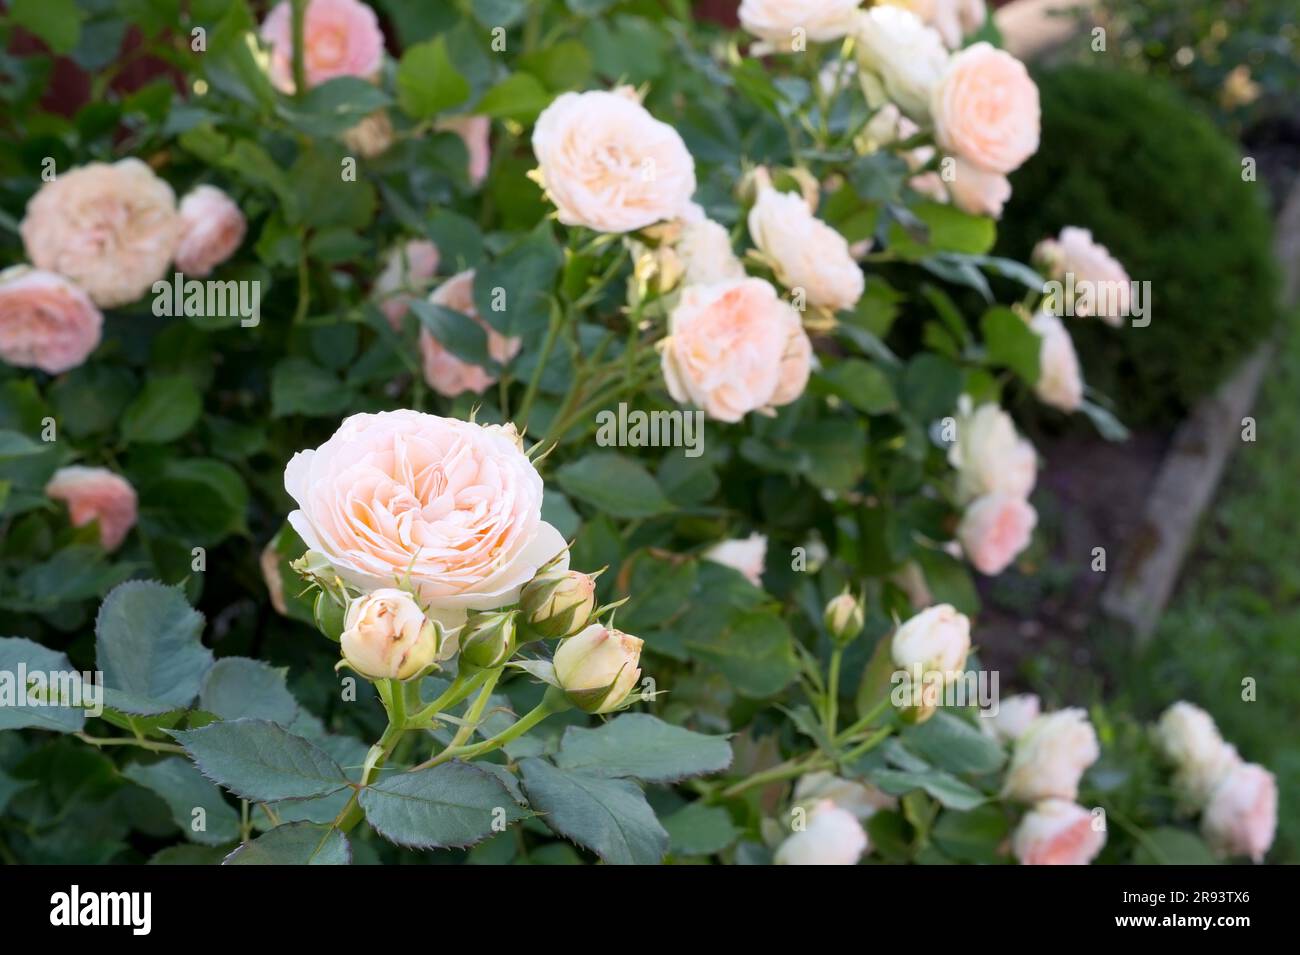 Wunderschöne rosa Rosenblume Pastella. Die Blühende Floribunda Rose. Hybridteerosen im Garten. Stockfoto